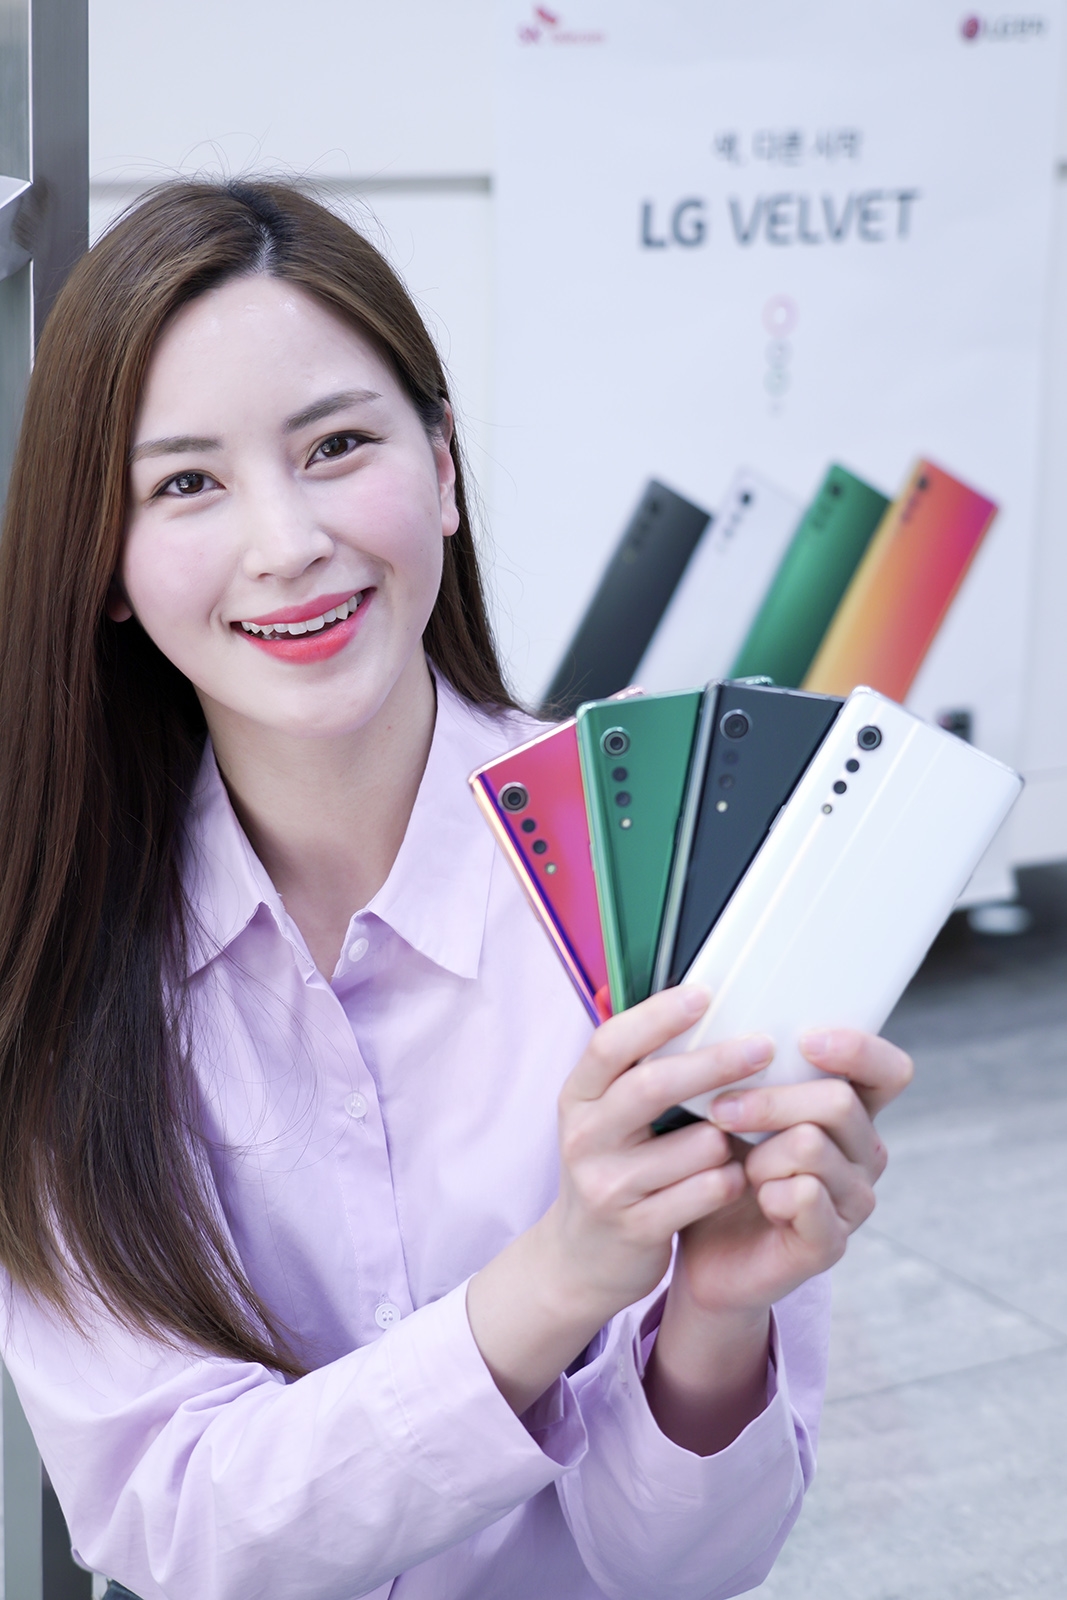 SK텔레콤 홍보모델이 T월드 매장에서 LG 벨벳 스마트폰을 소개하고 있다.